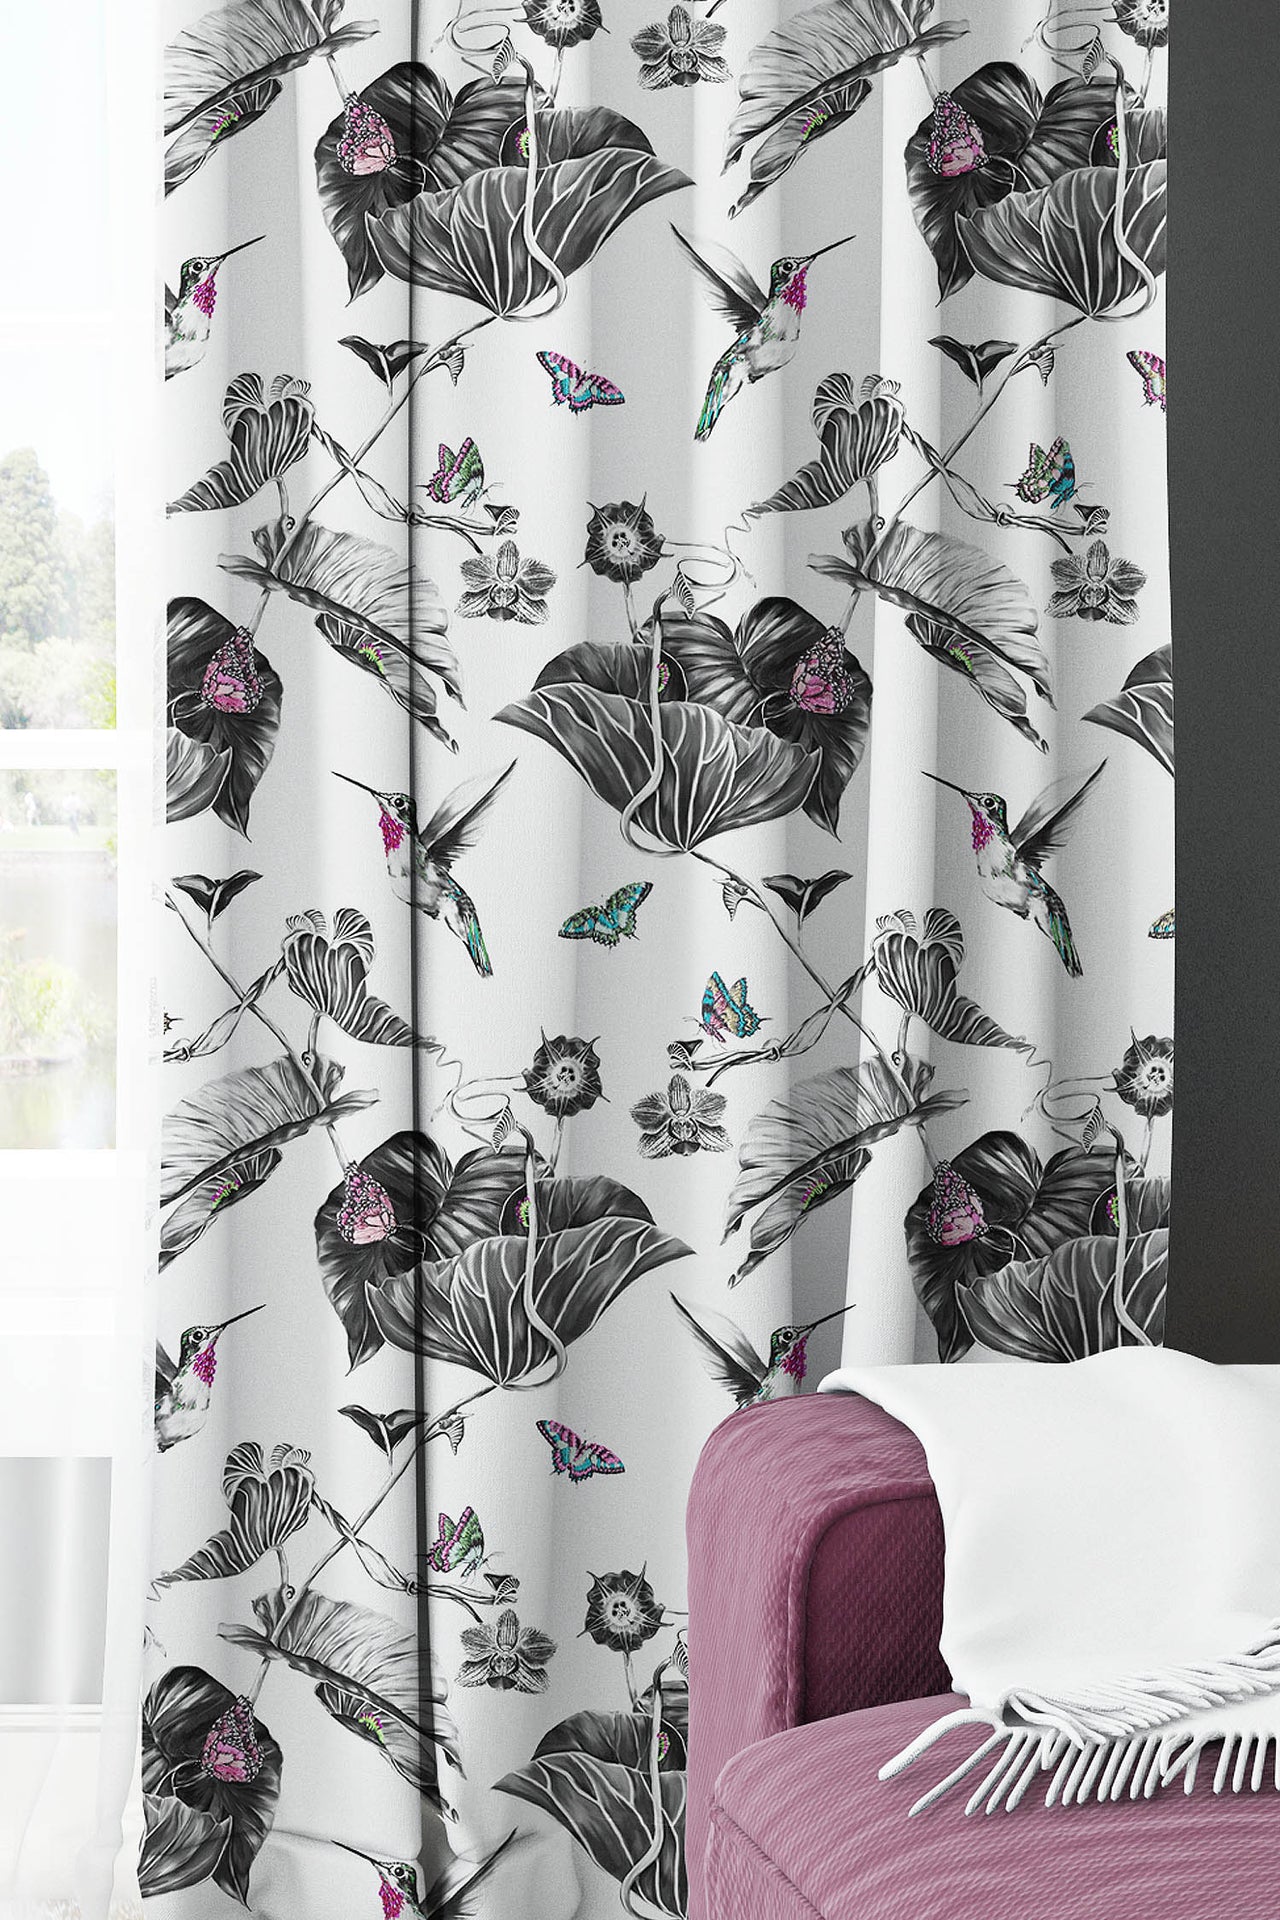 Hummingbird Curtains